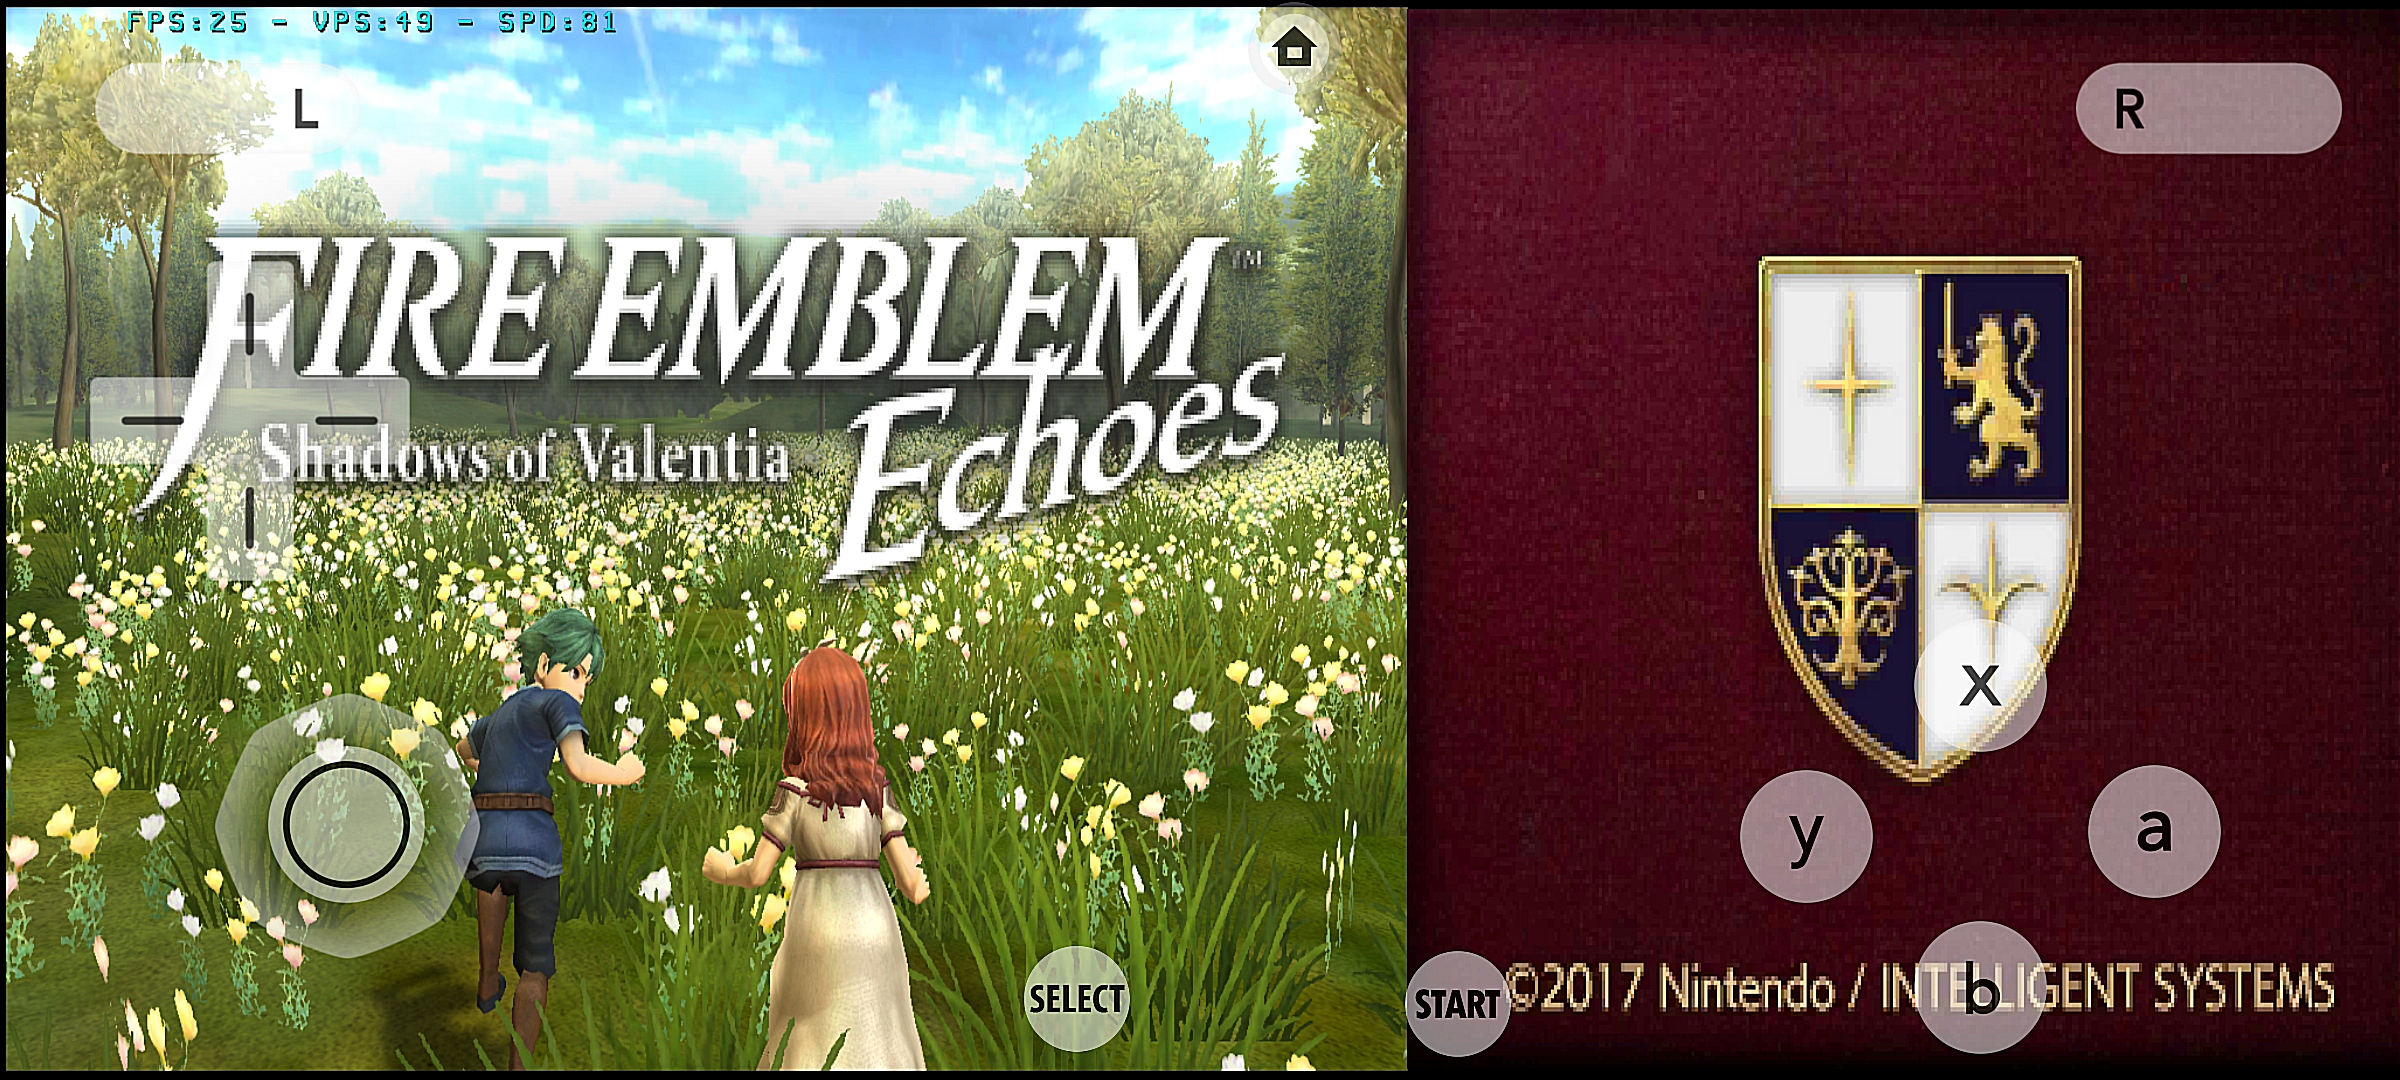 [3DS/Citra] Fire Emblem Echoes - Shadows of Valentia Việt Hóa